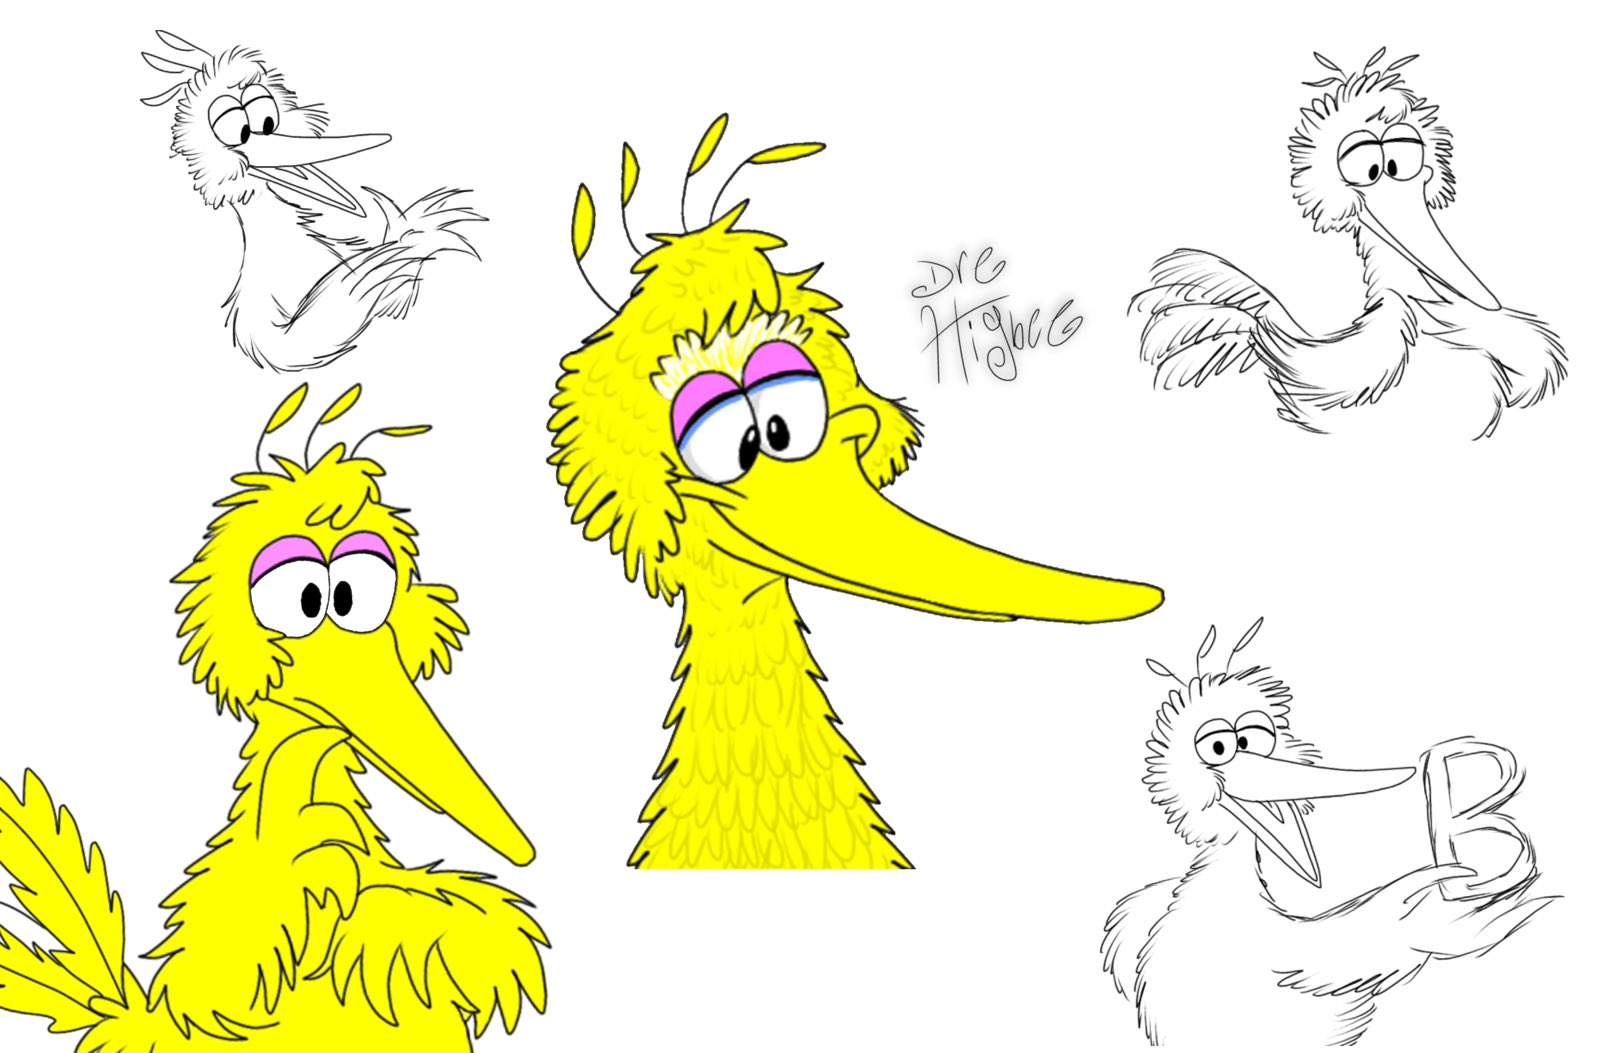 Dre higbee on x my drawings of big bird httpstcouonwizyaz x